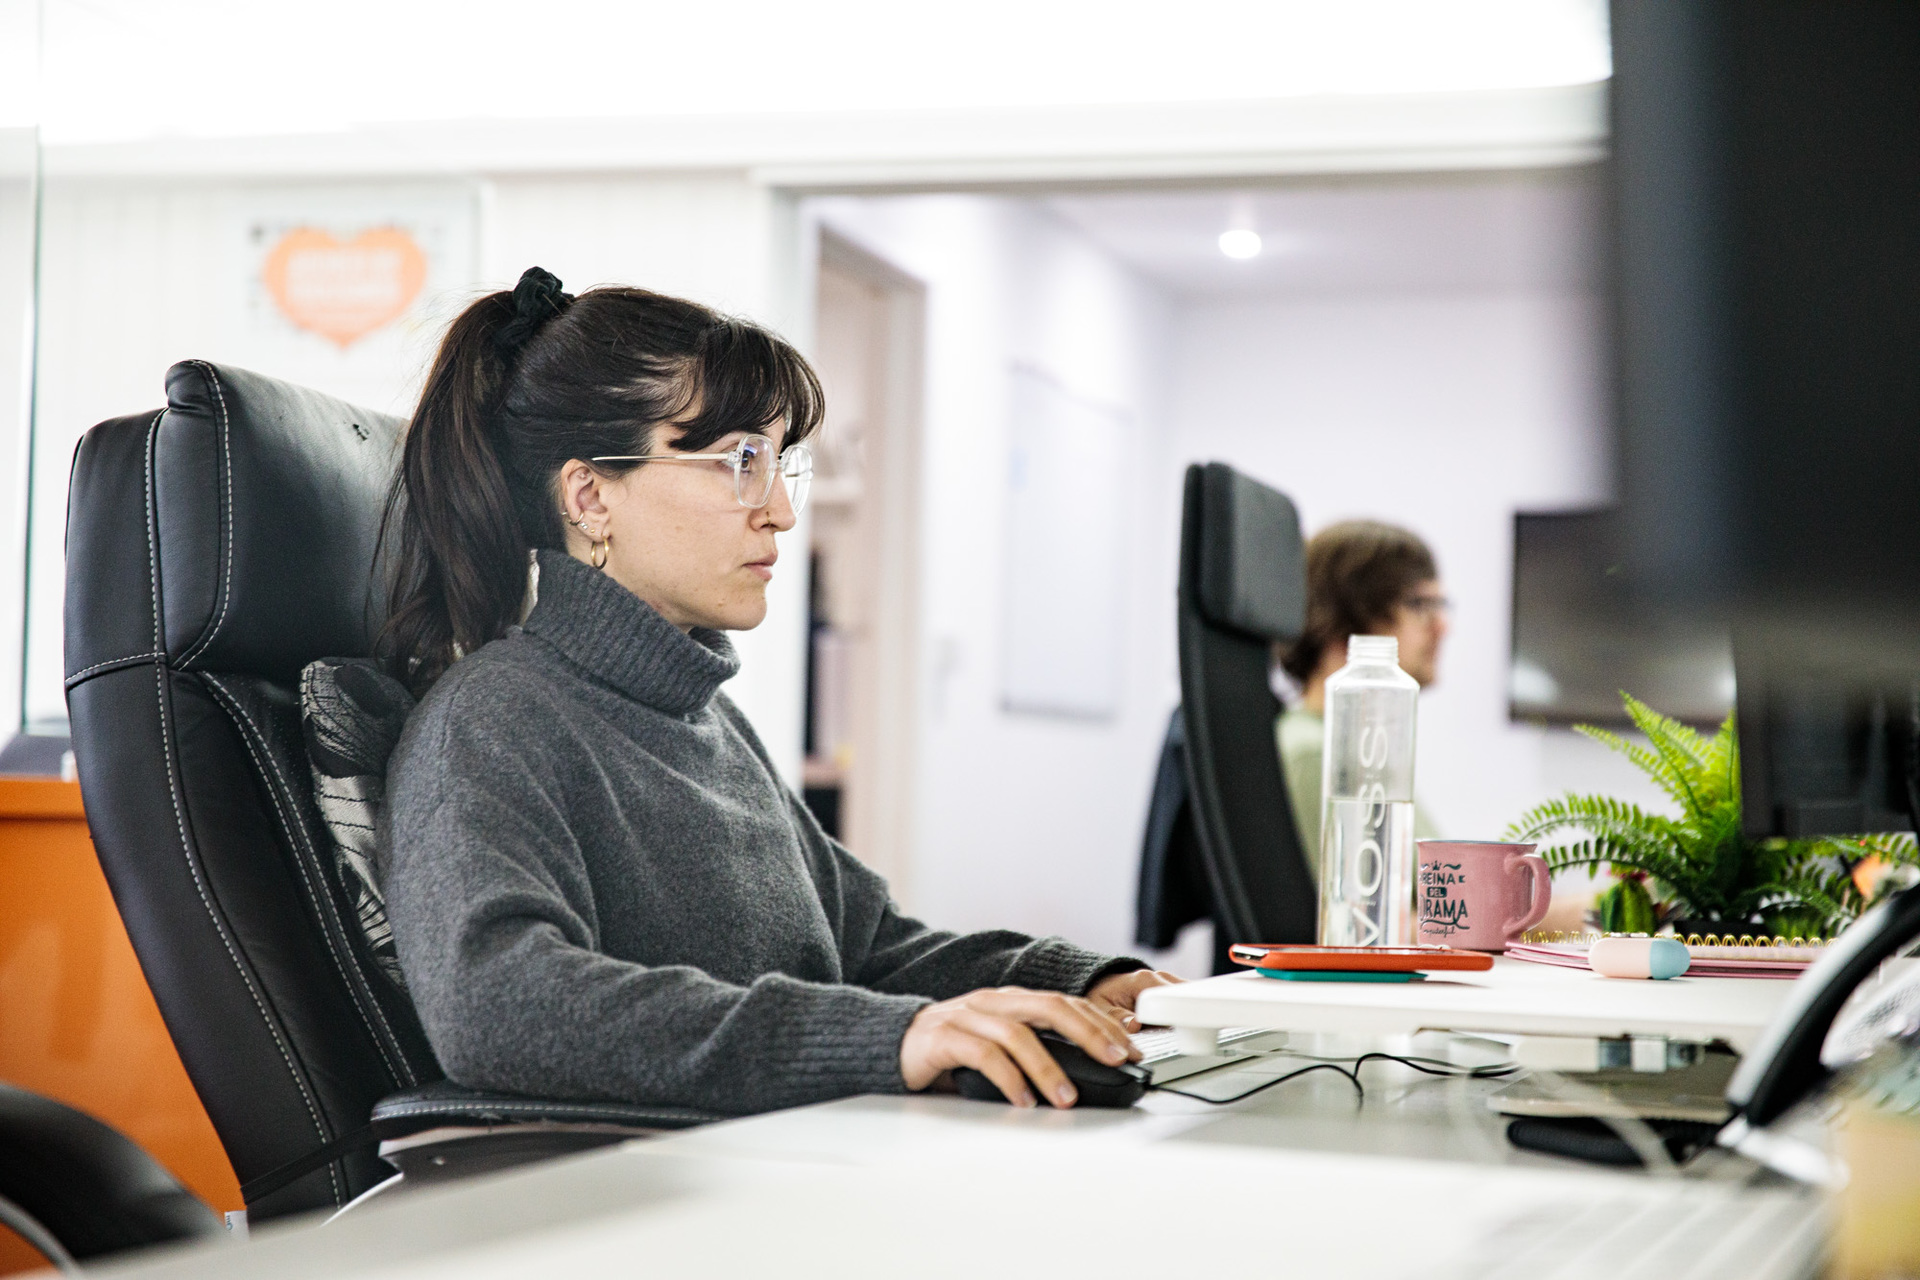 A woman sat at a desk, designing a responsive website